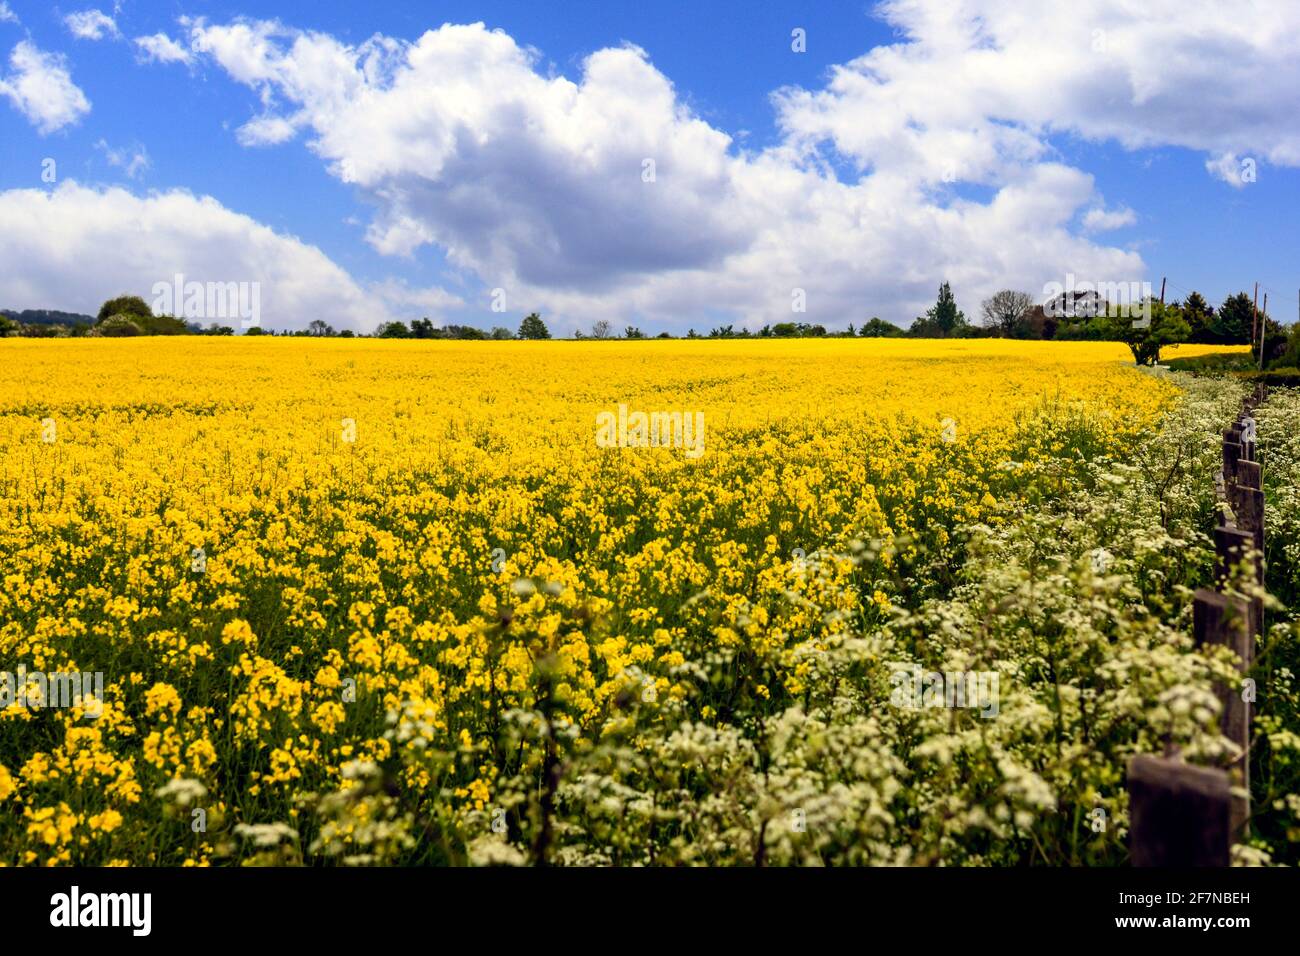 Yellow Rape Seed Crop Field in rural England Stock Photo